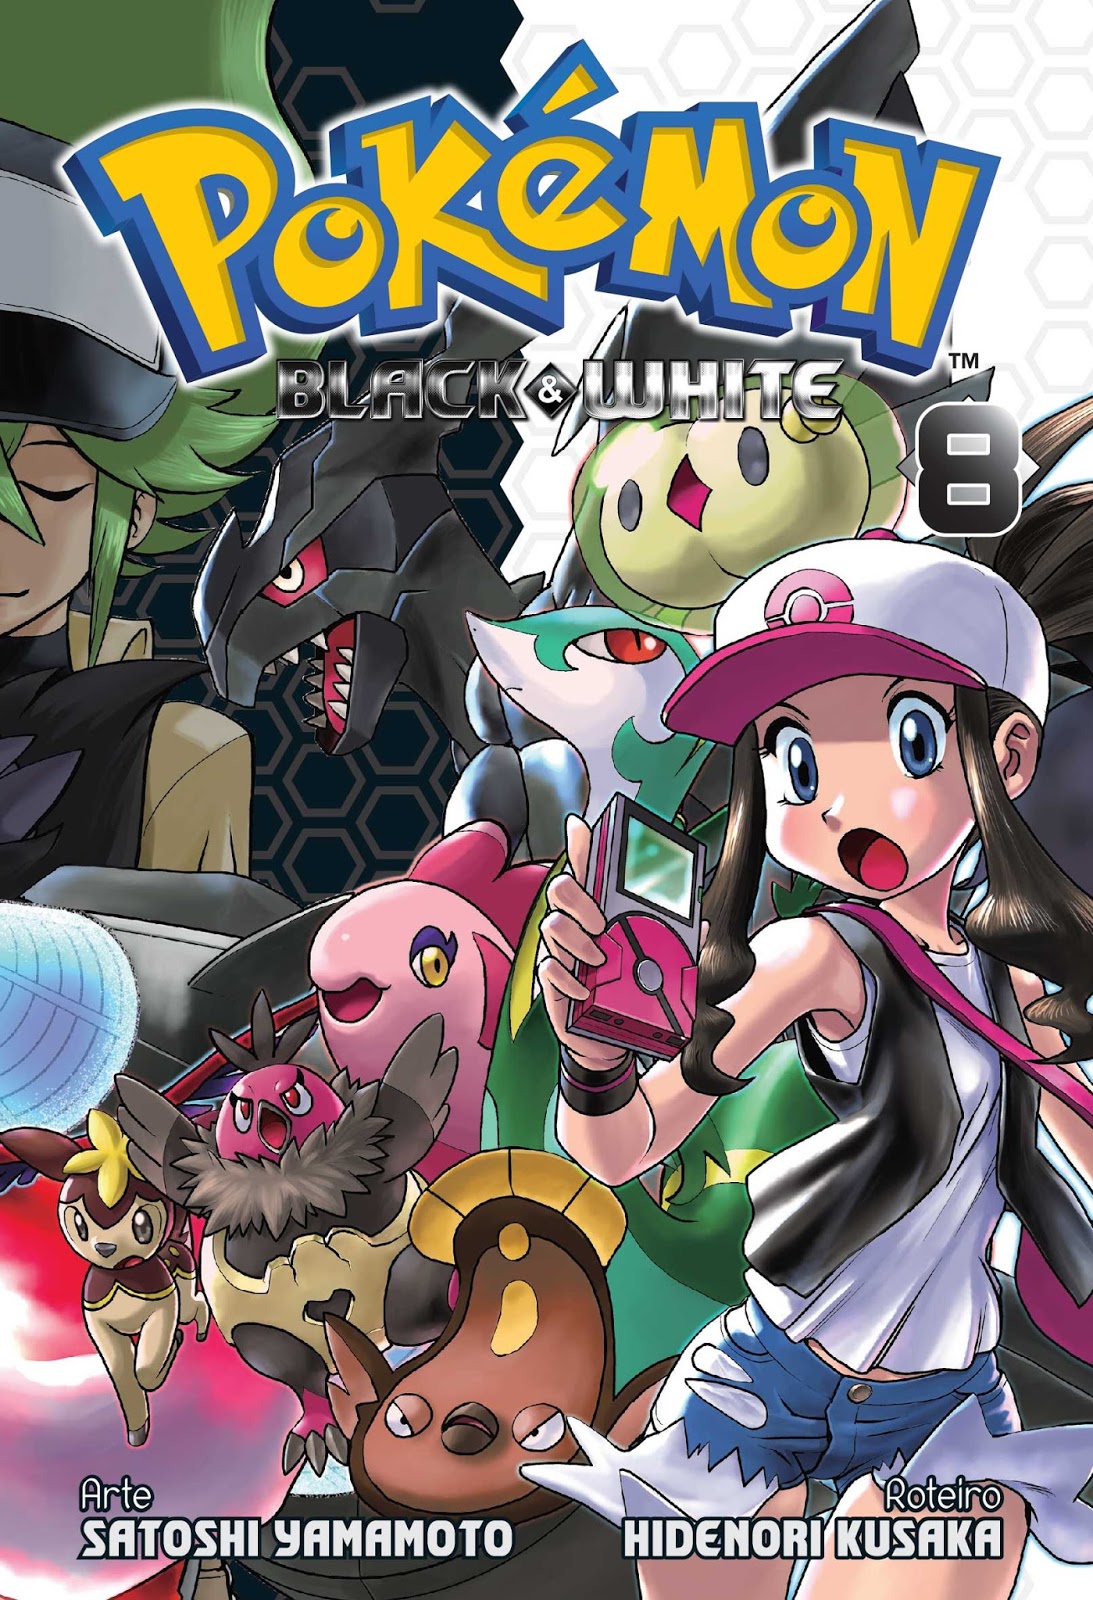 Pokémon XY Dublado - Episodio 1 - Kalos, Onde Sonhos e Aventuras